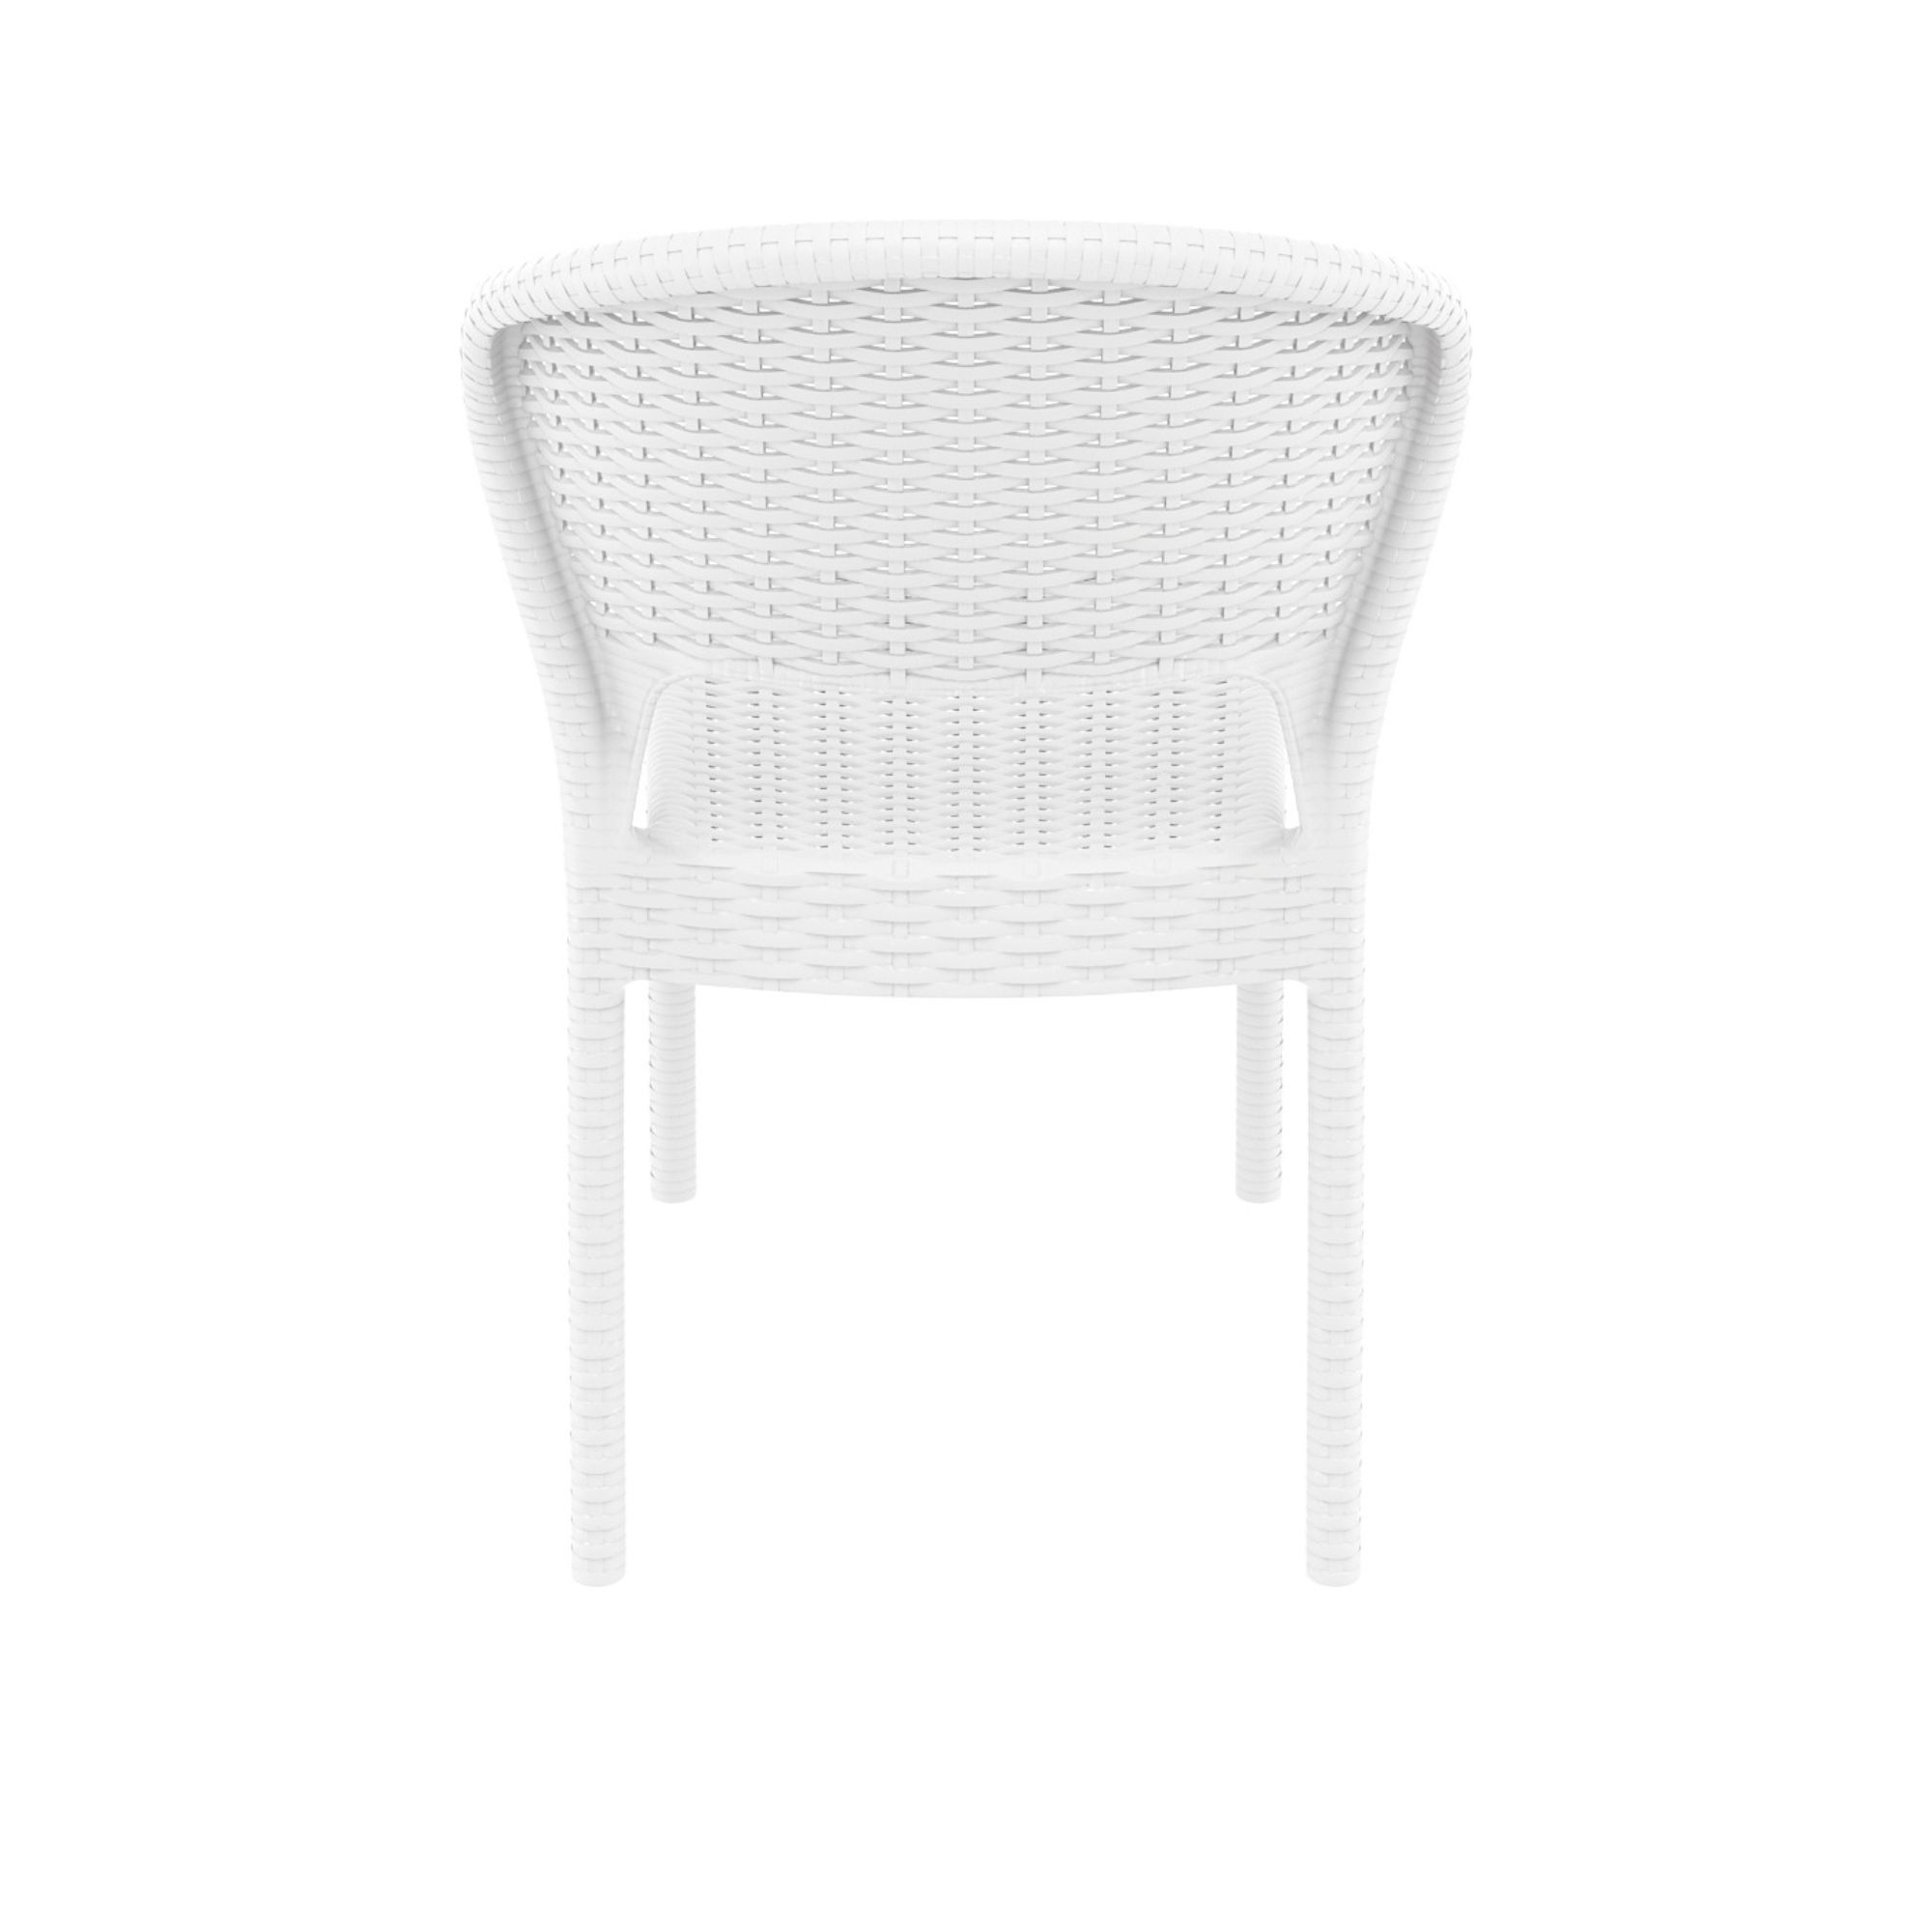 Siesta Daytona Resin Wickerlook Set of 2 Dining Chair White ISP818-WH - image 5 of 9